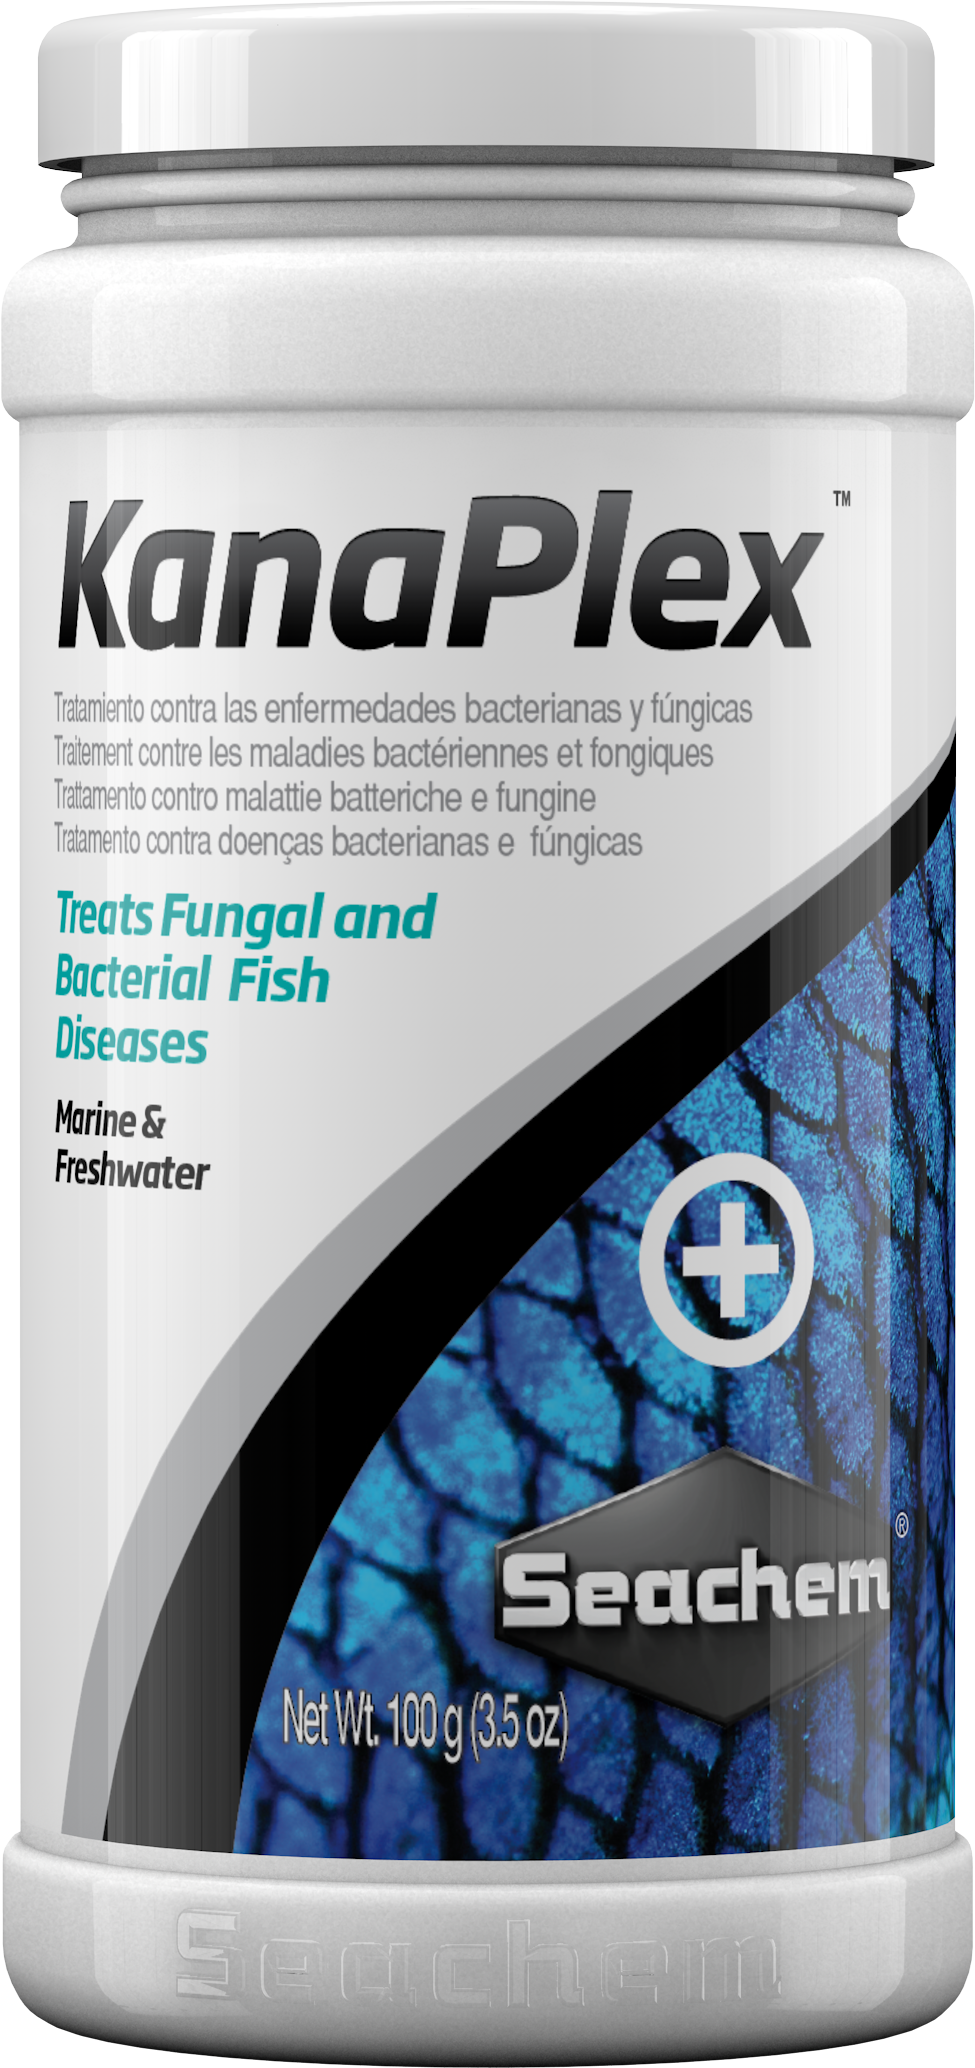 Kanaplex